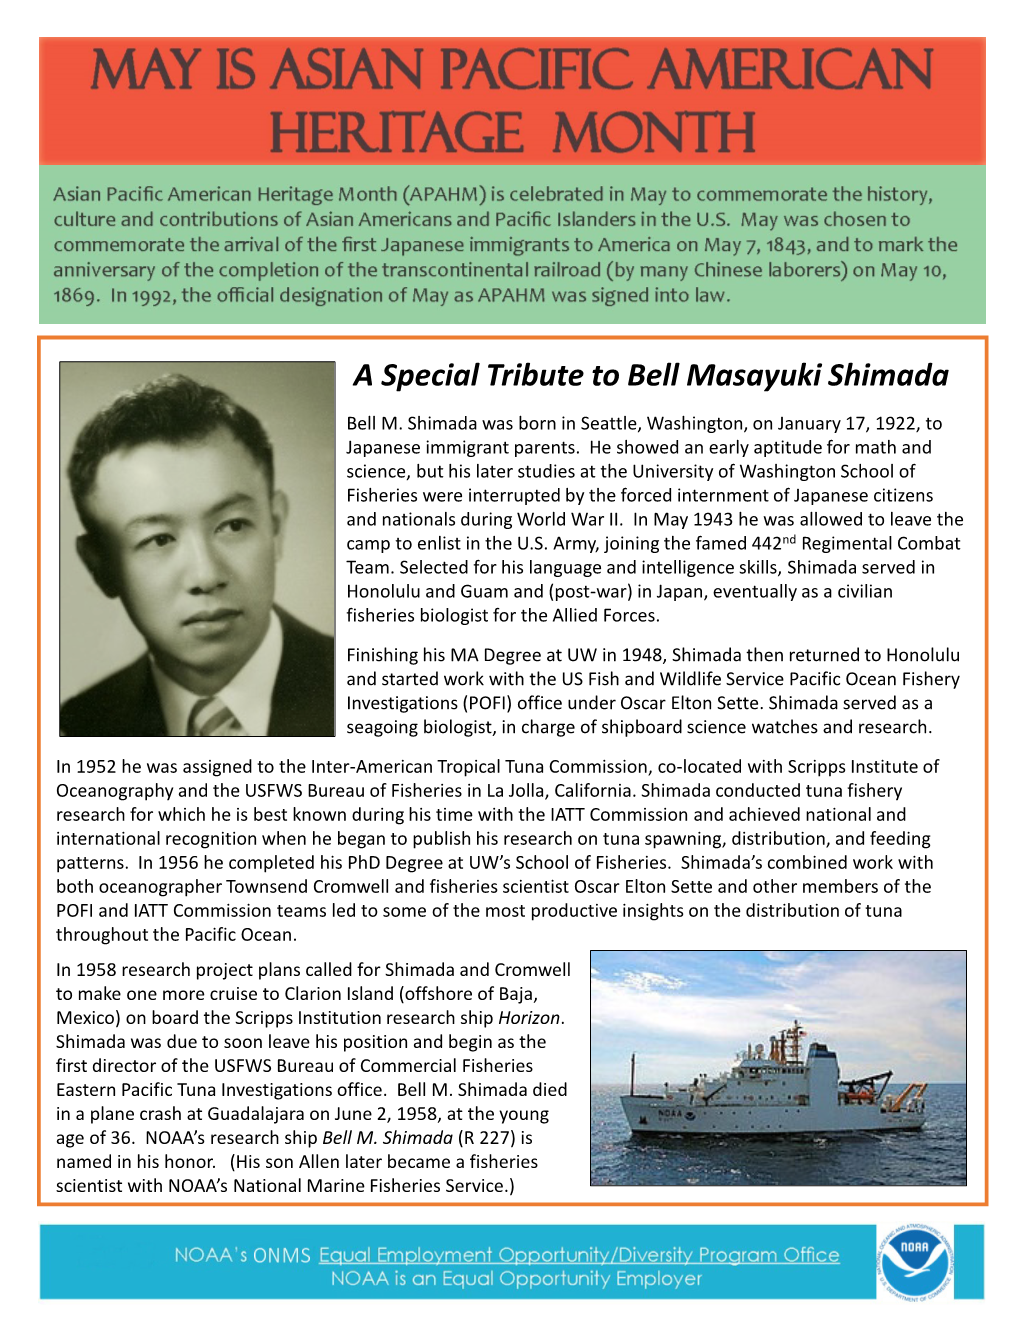 A Special Tribute to Bell Masayuki Shimada